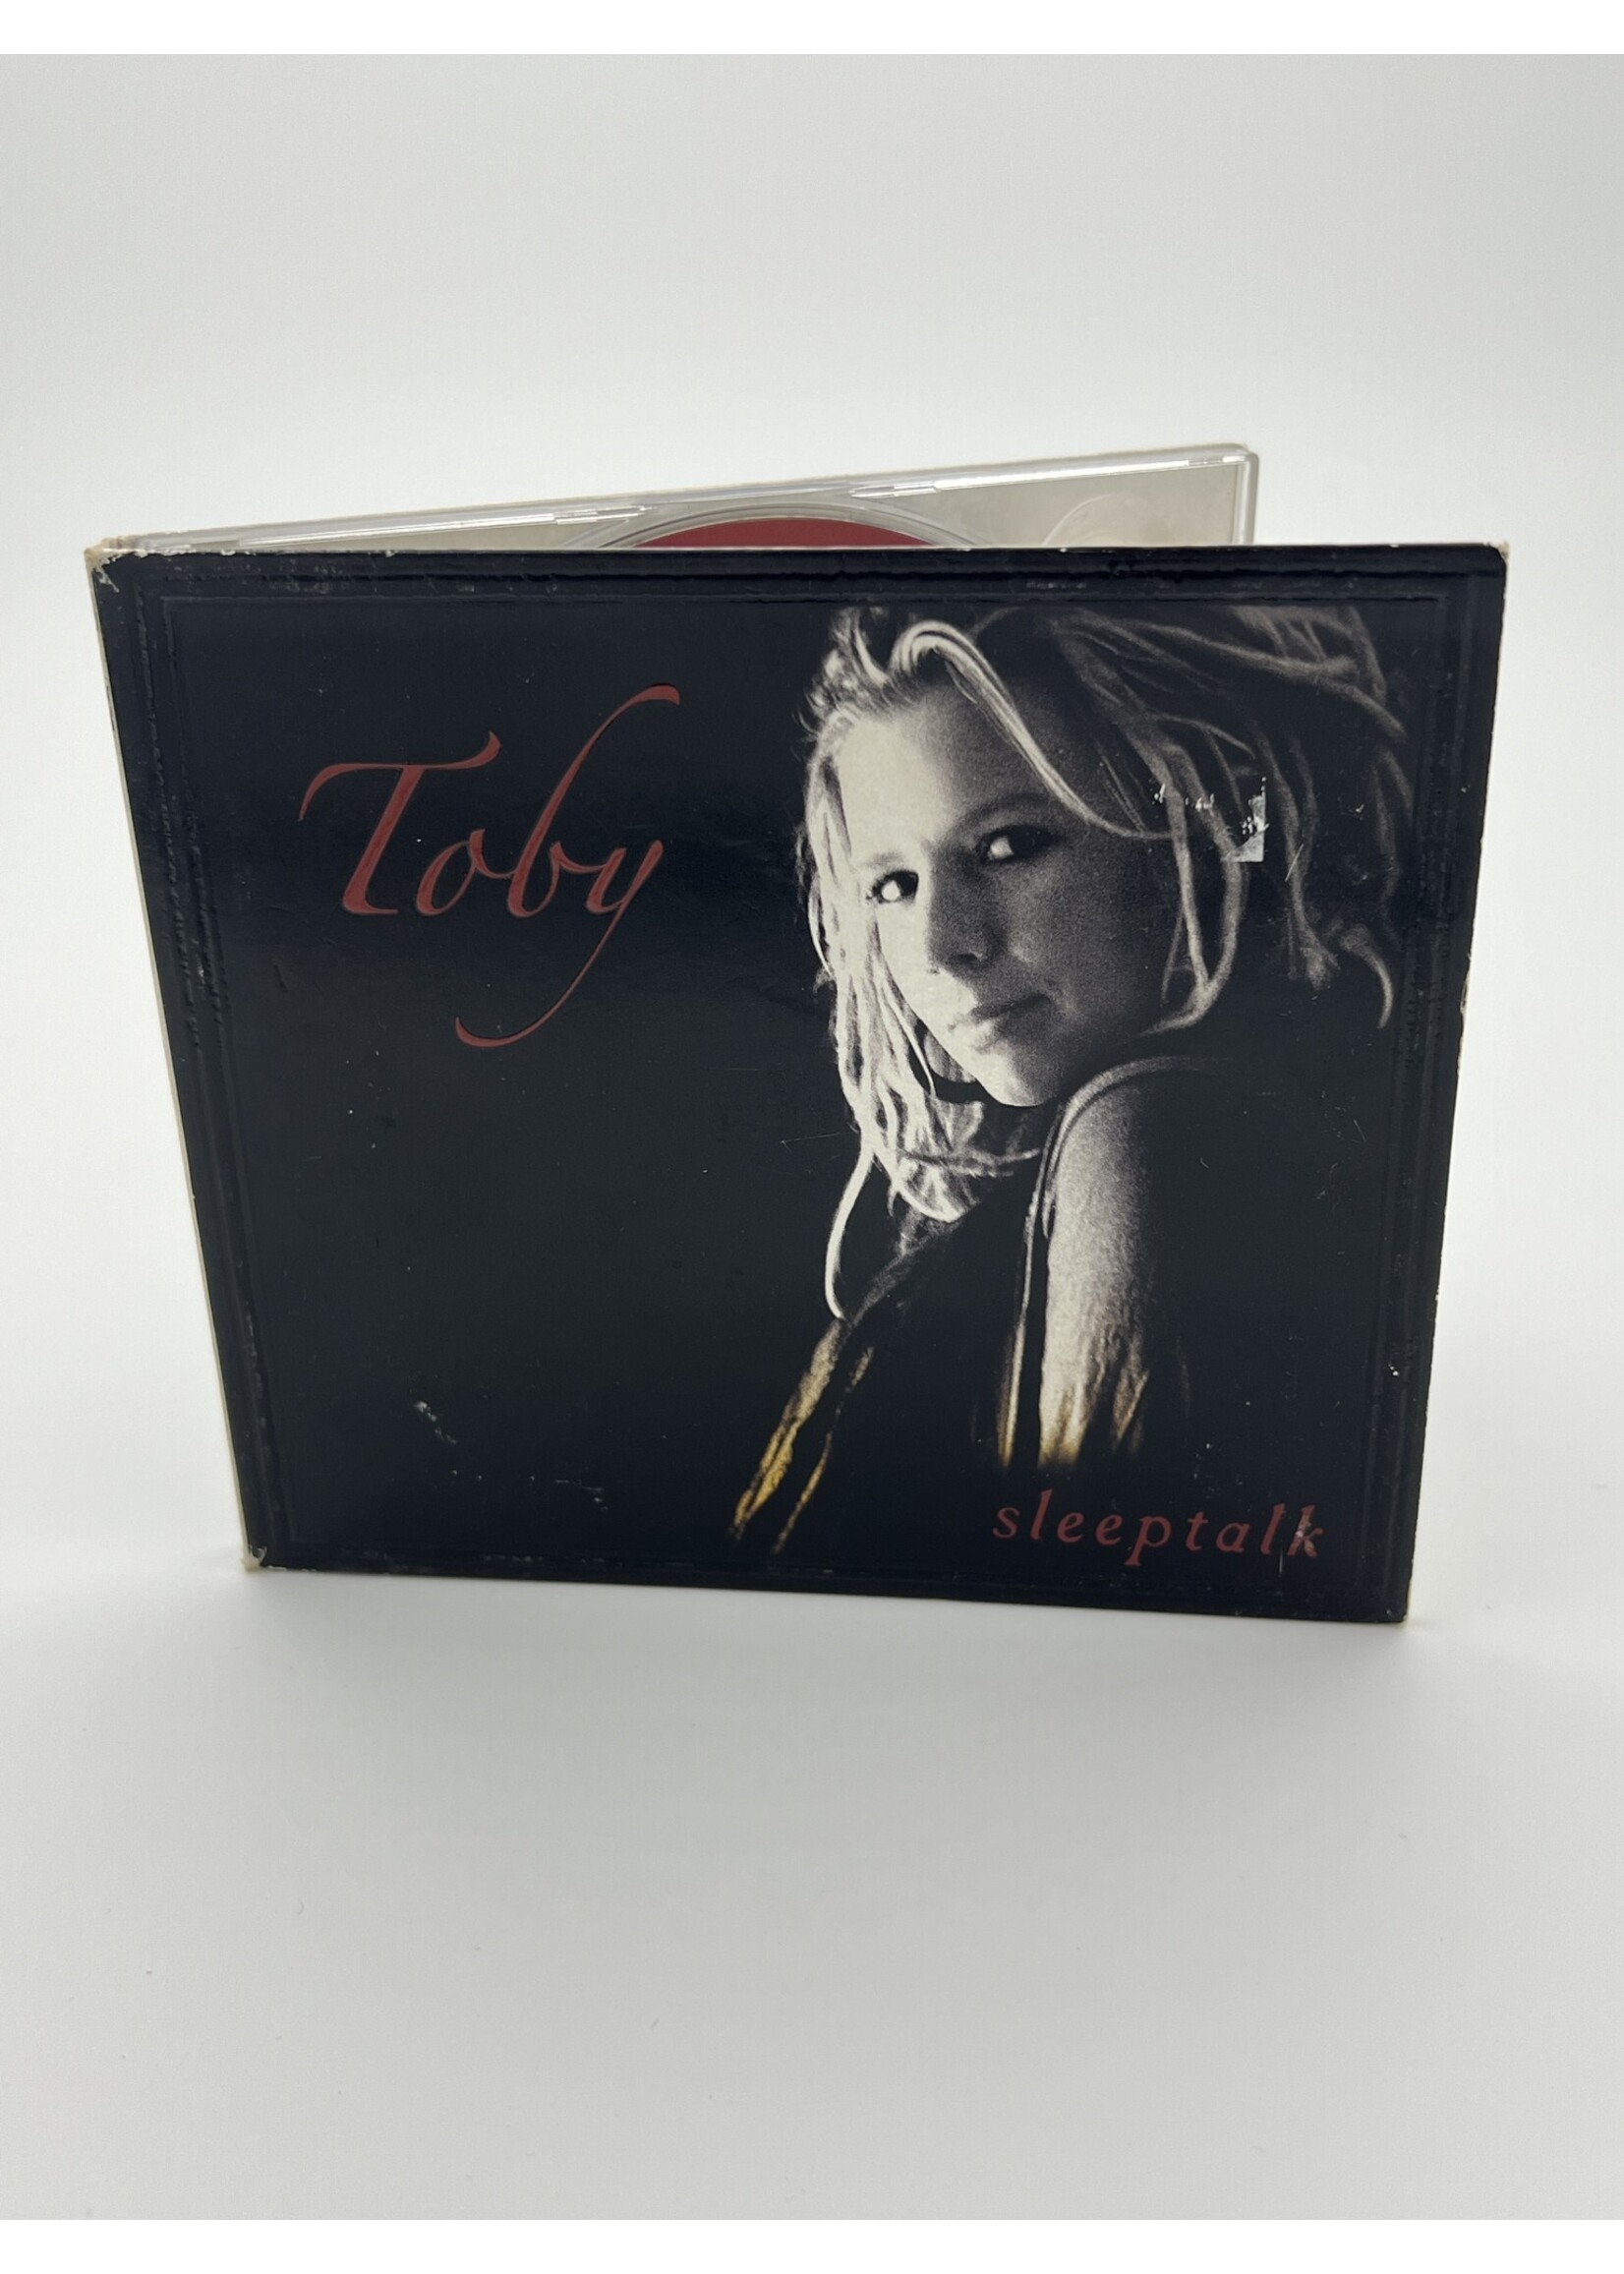 CD   Toby Sleeptalk CD